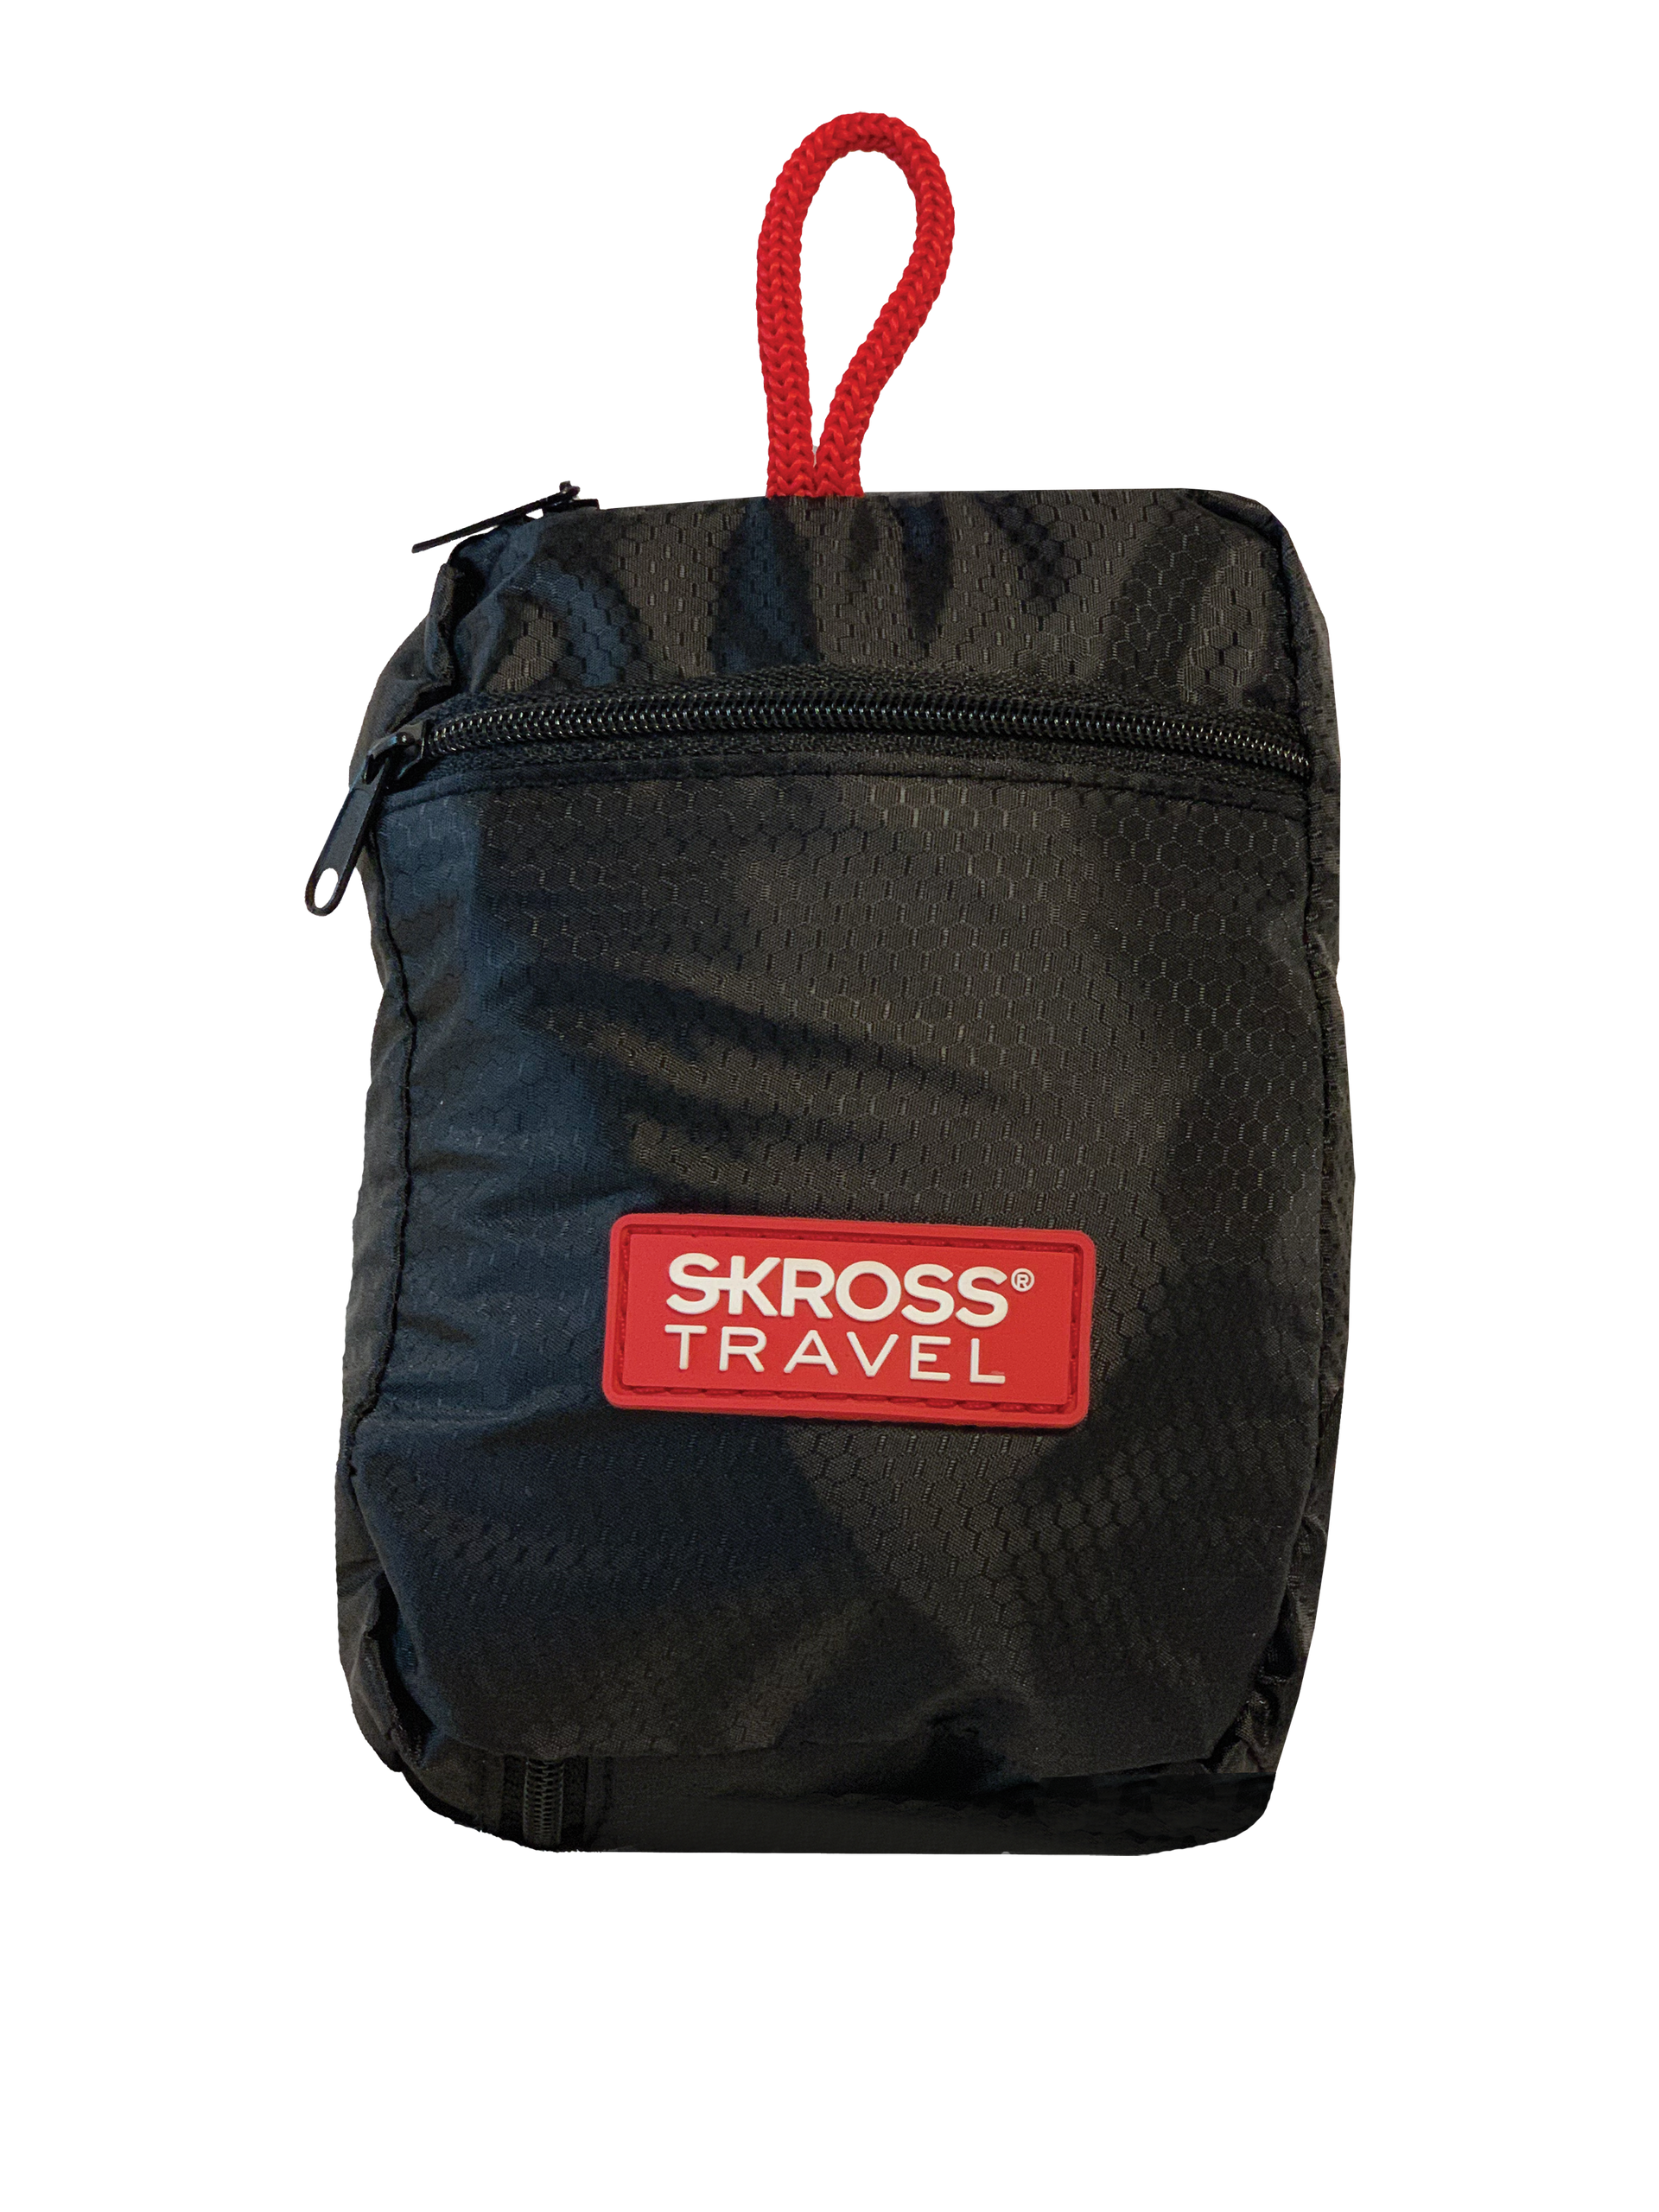 Skross black backpack packaging Front